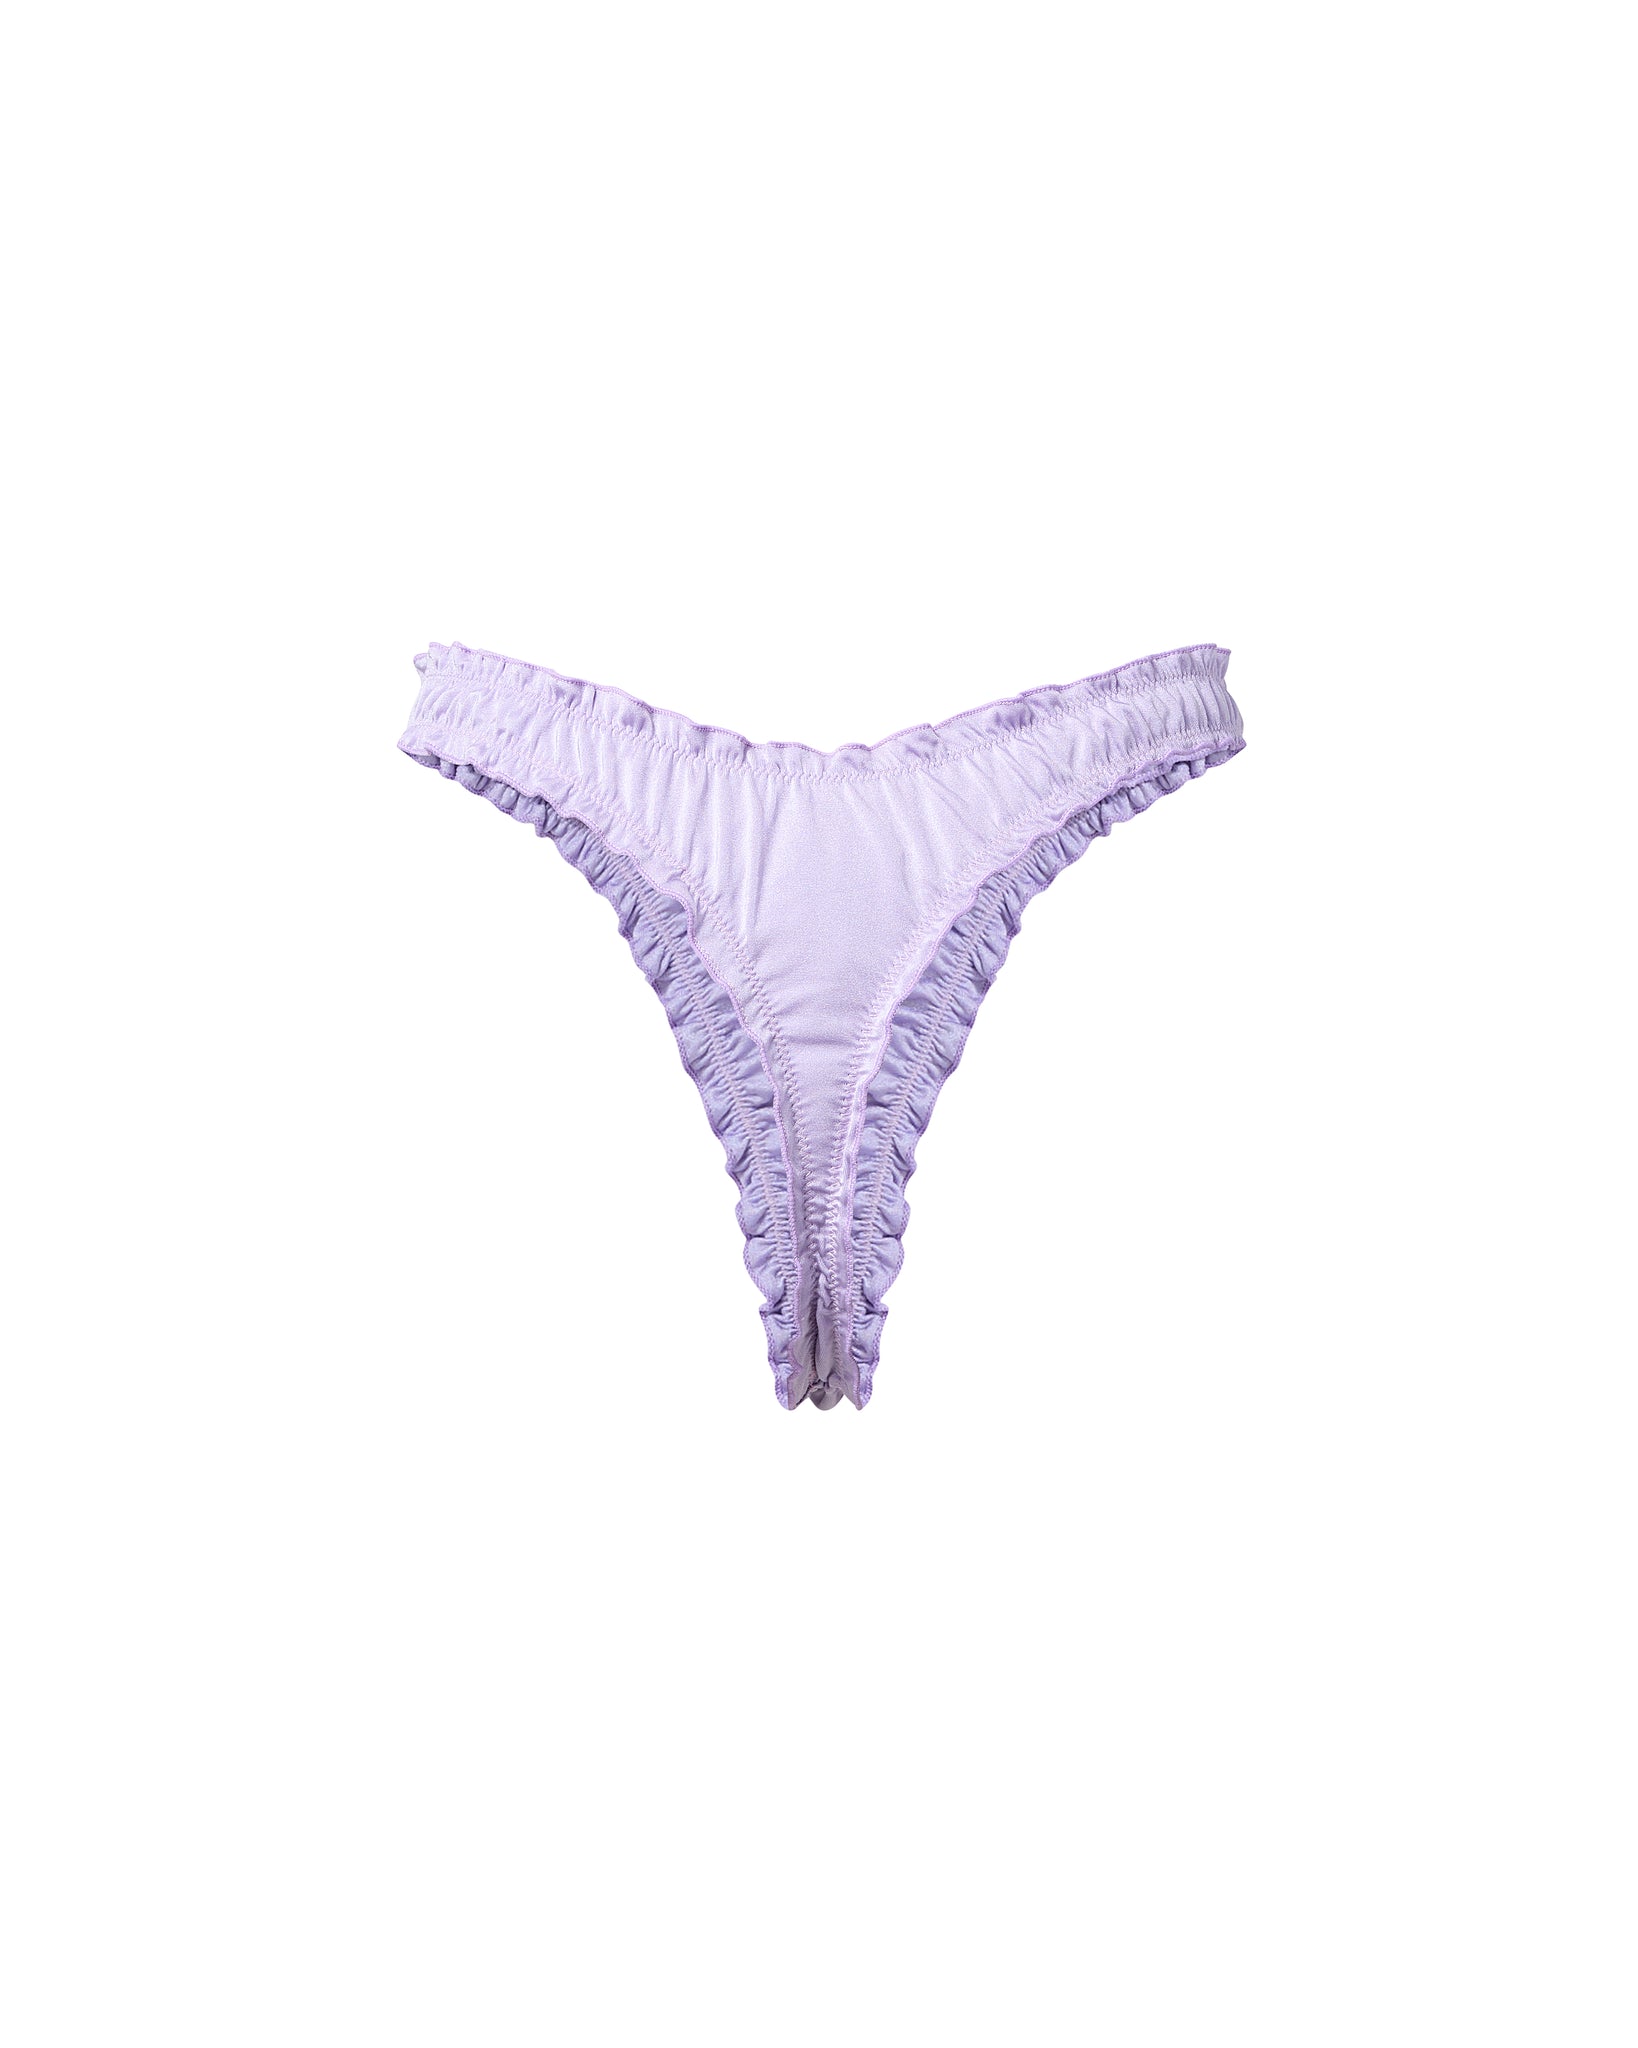 Mid-Tone Purple Cheeky Ruffle Women's Bathing Suit Bottom